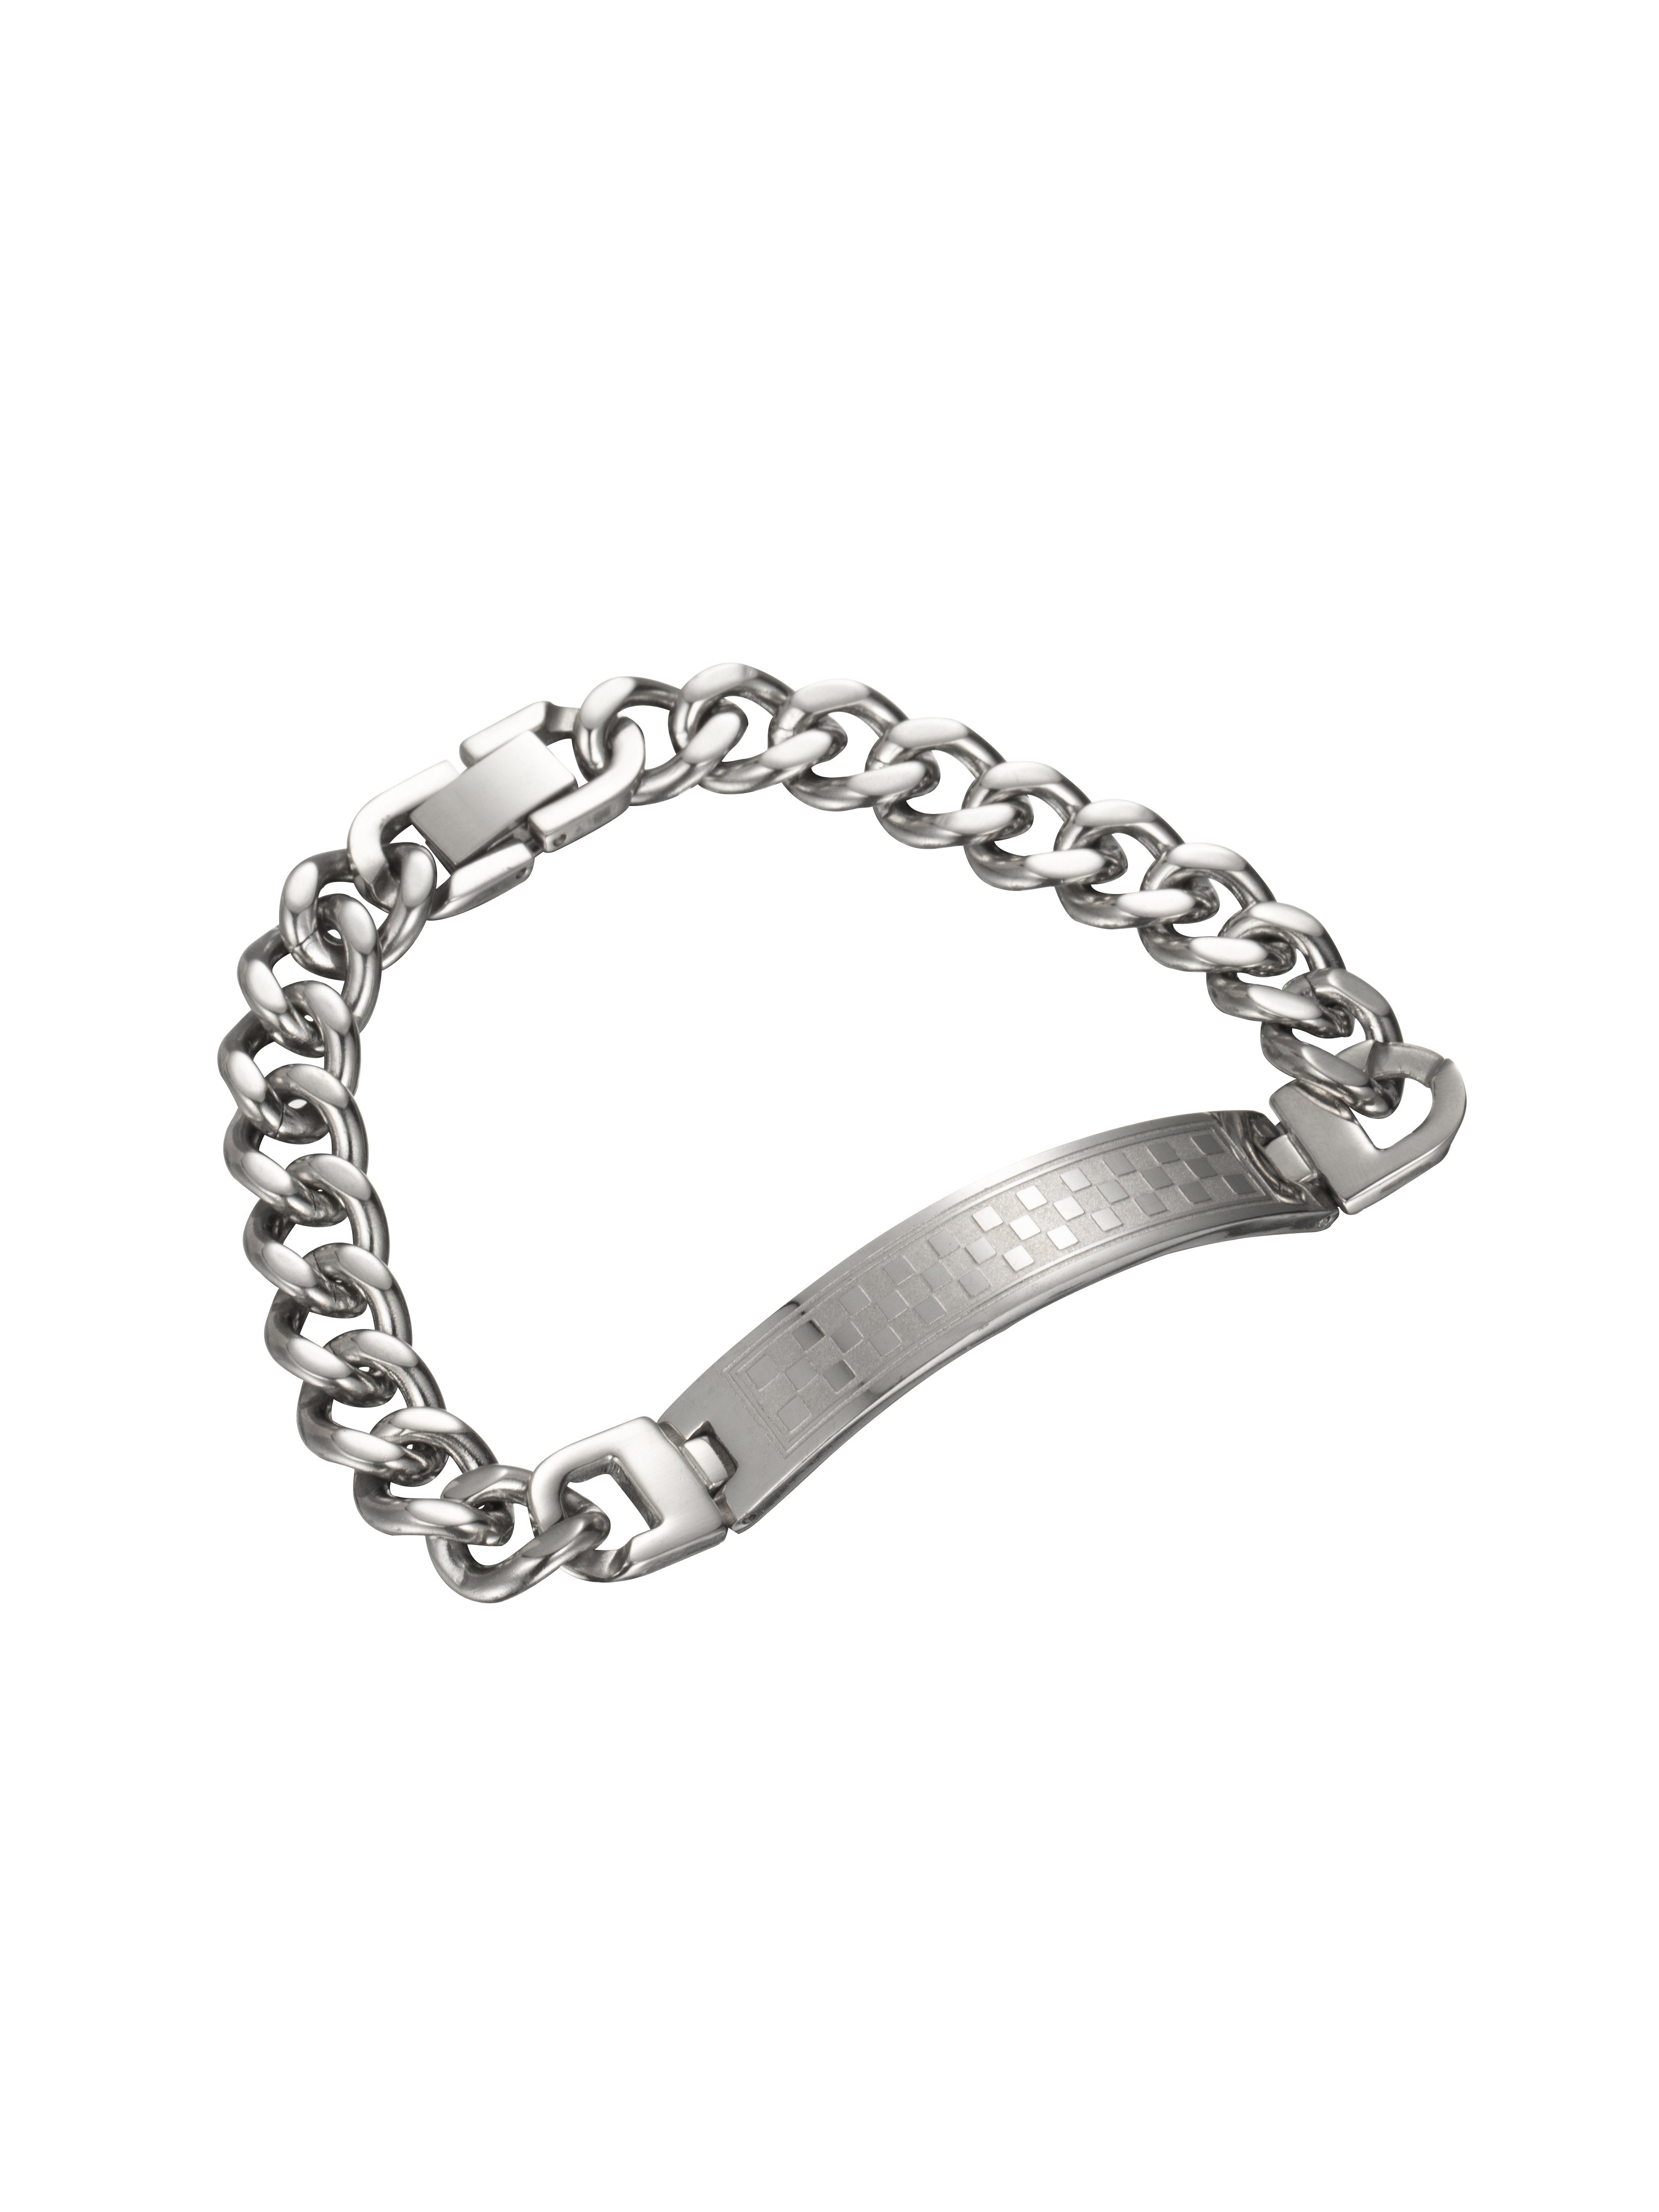 10pcs-Men's Stainless Steel Square Bracelet In Silver Tone|GCJ211-Silver Bar|UK seller